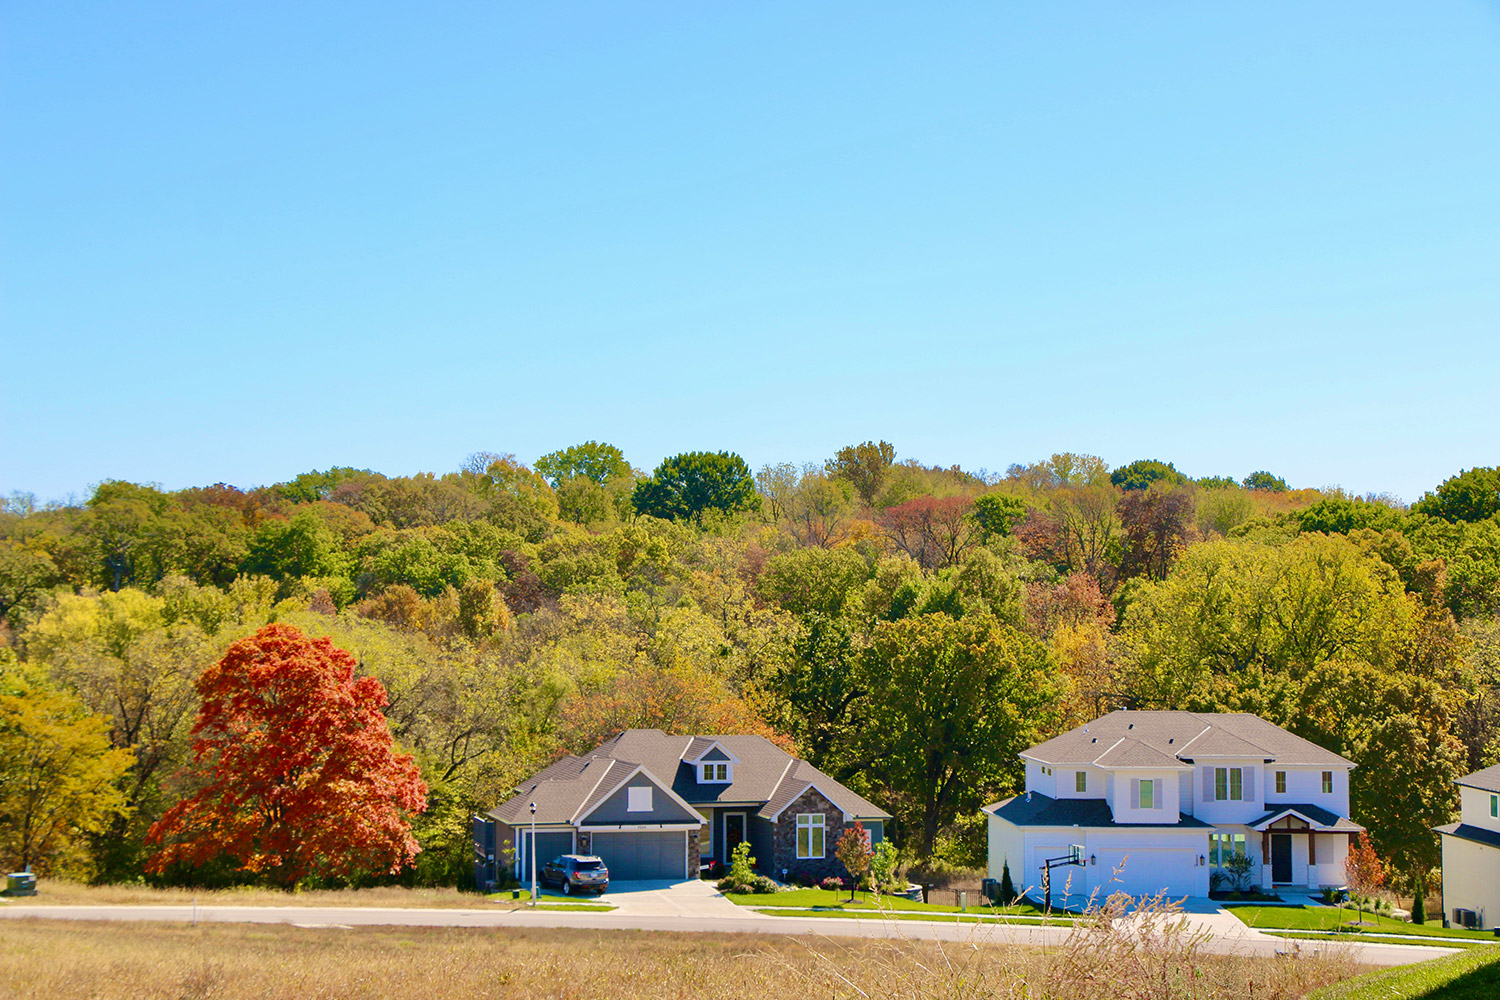 Kenneth Estates neighborhood with fall foliage